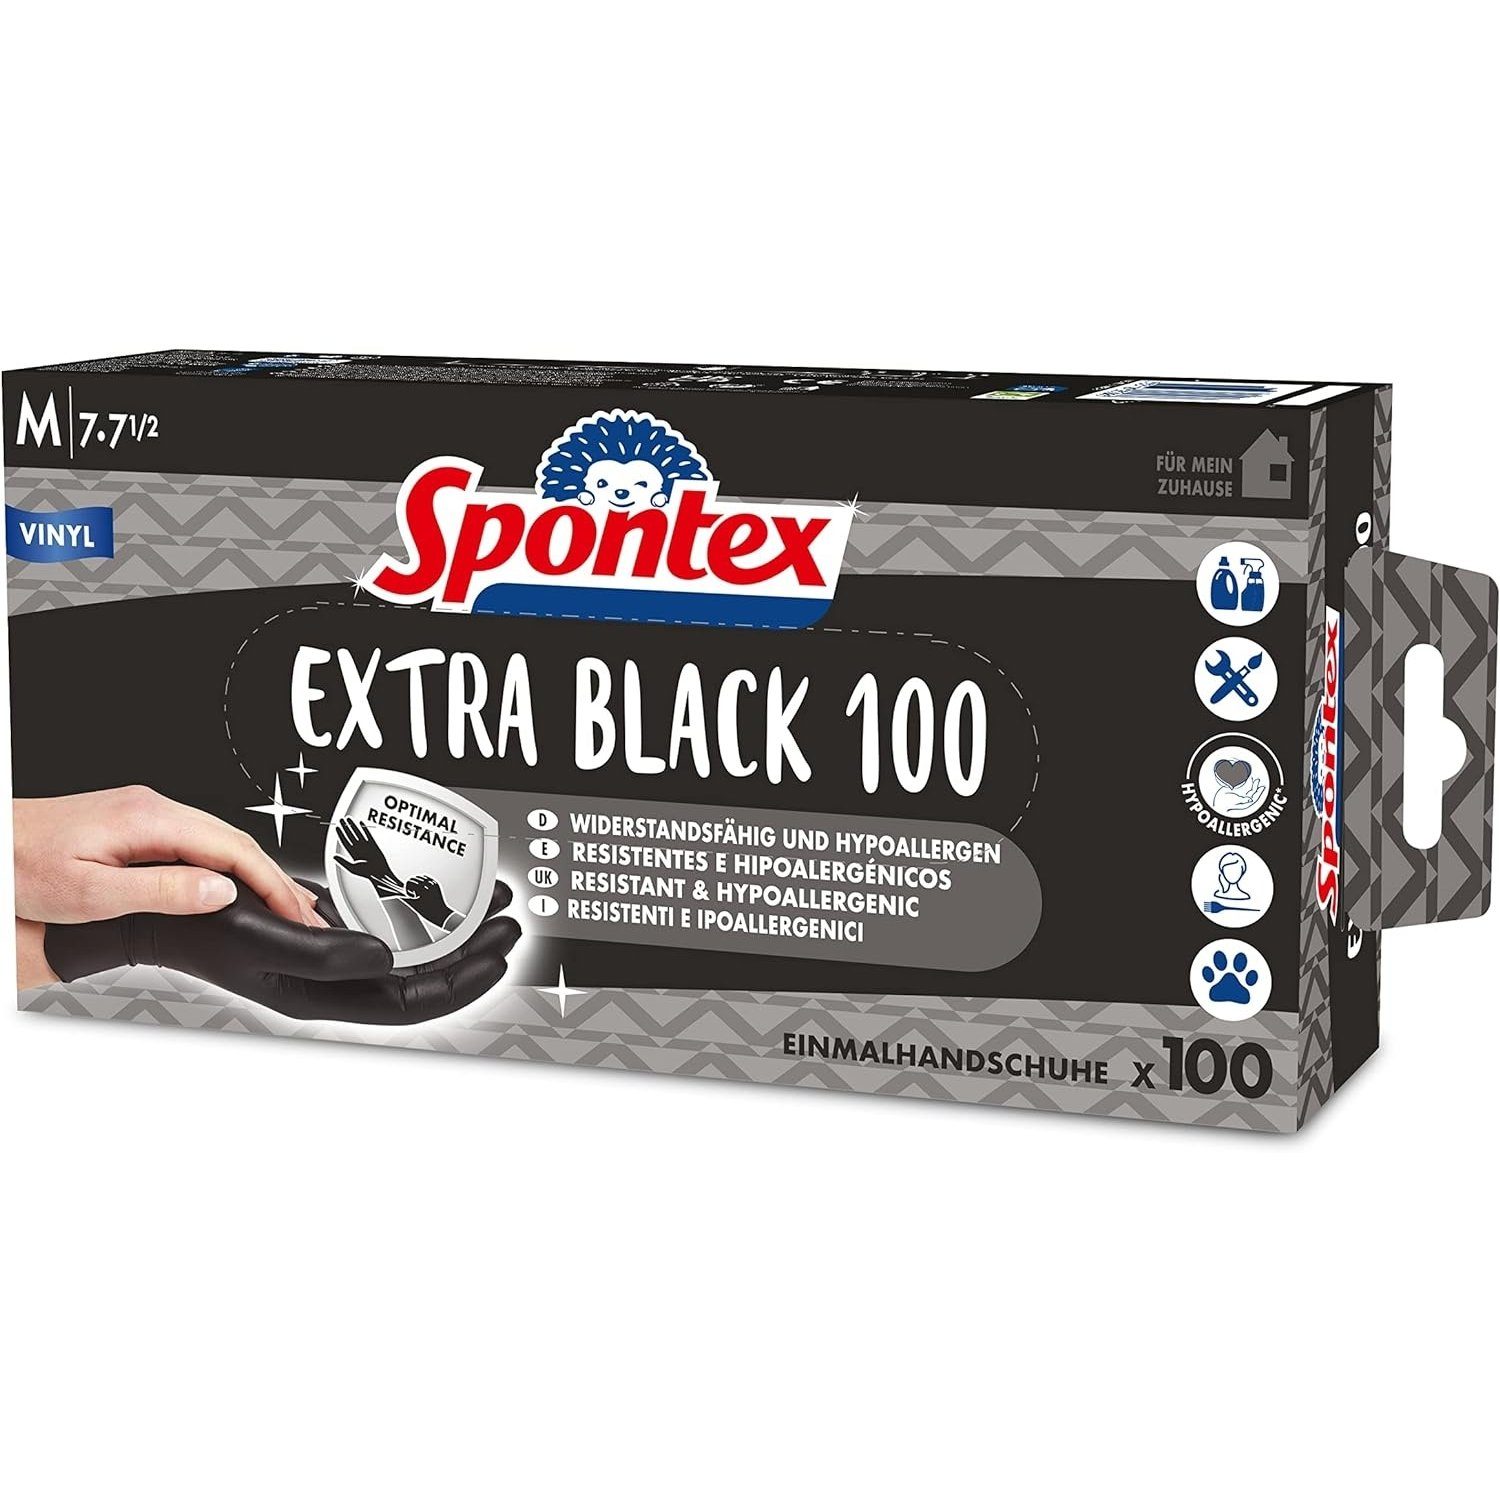 Black Arbeitshandschuhe Einweghandschuhe Einmalhan Extra SPONTEX Spontex VINYL Einweghandschuhe